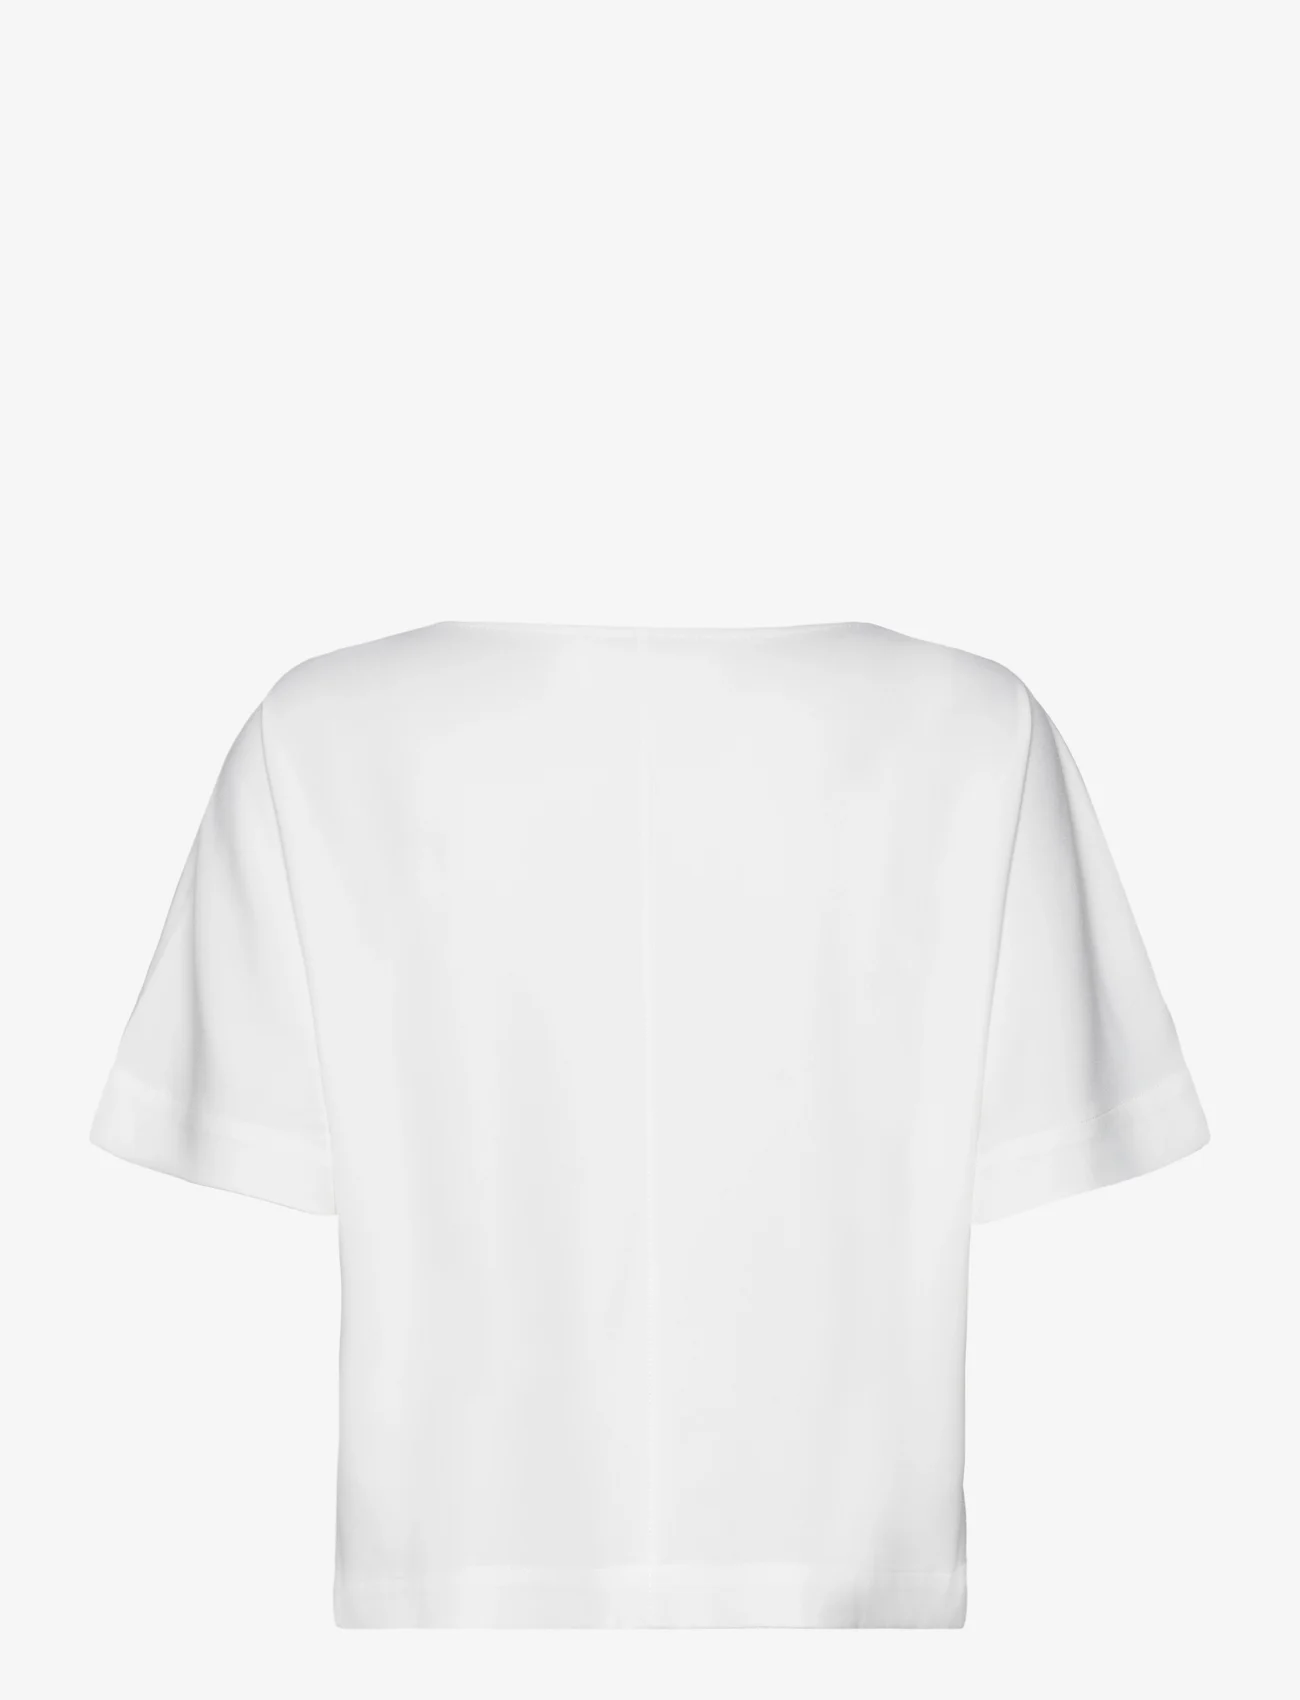 Marville Road - Ava Top - blouses korte mouwen - off-white - 1